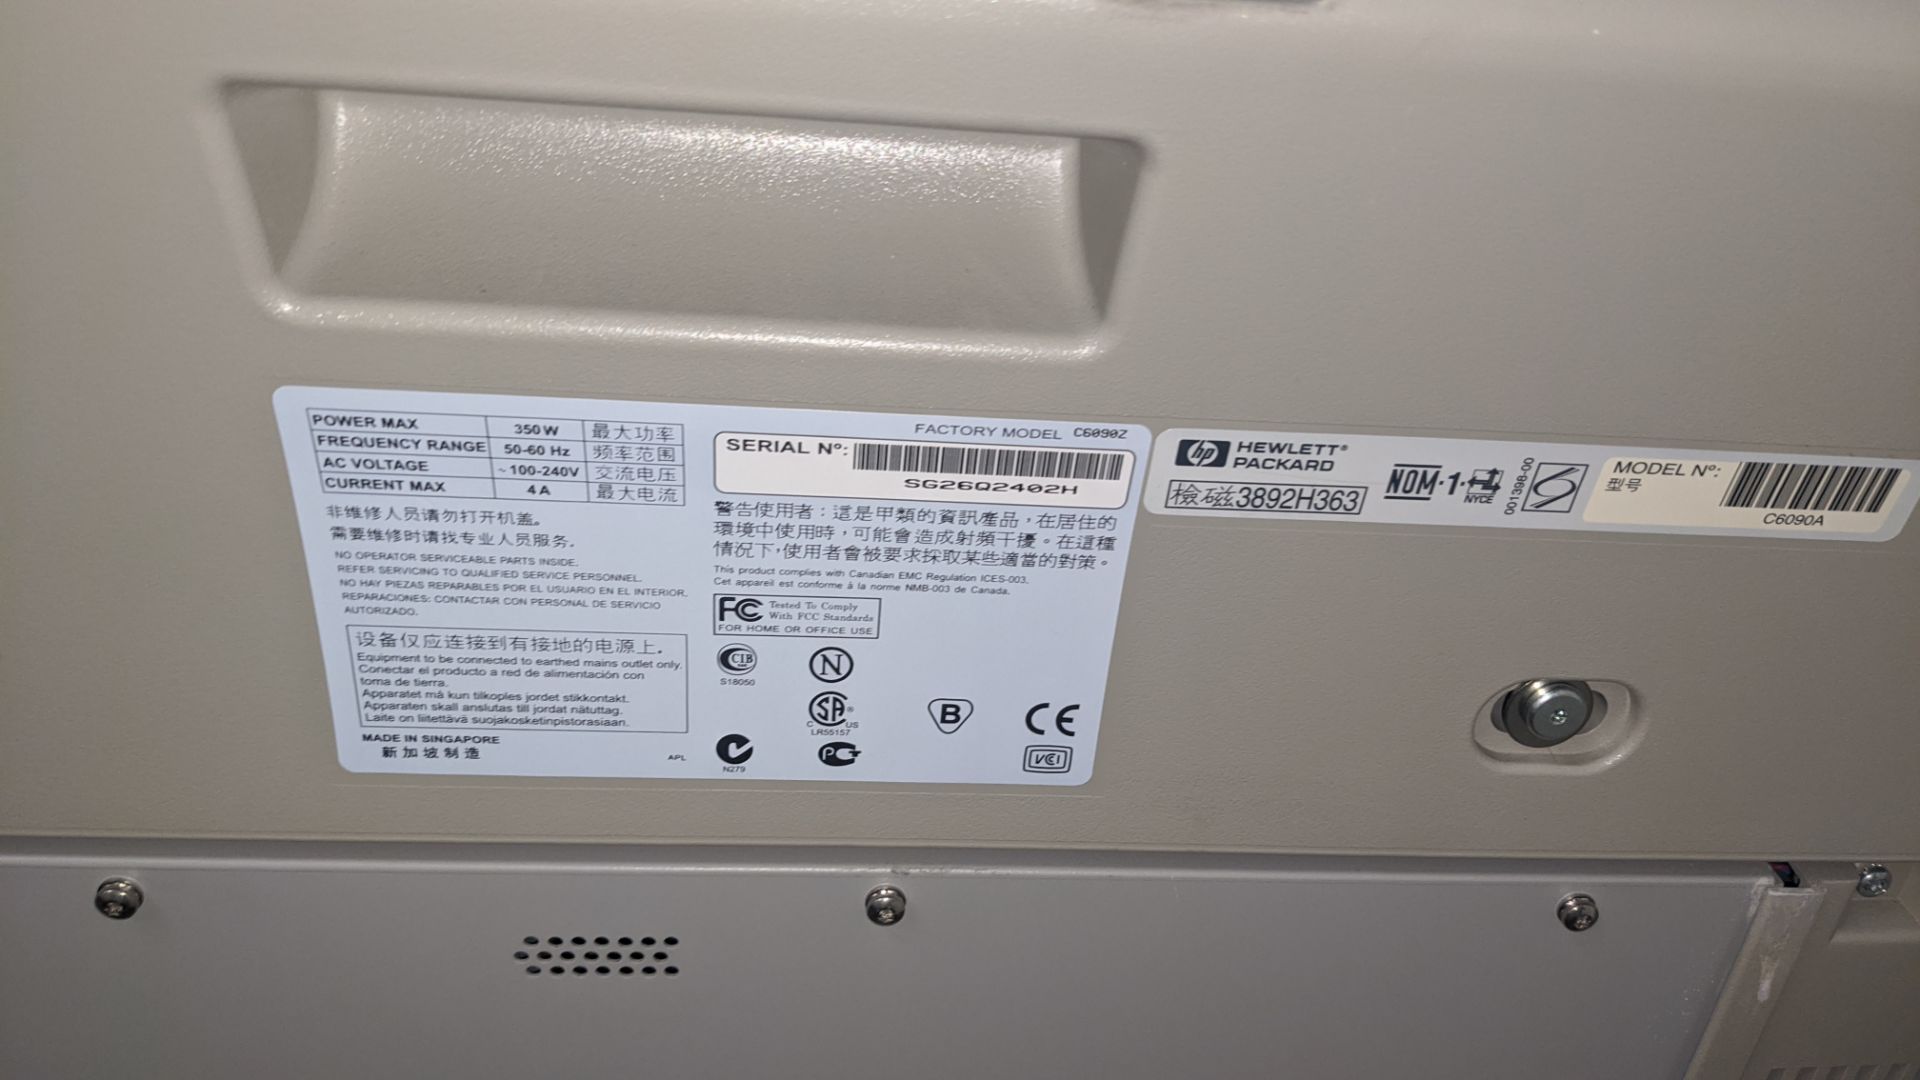 HP DesignJet 5000 wide format printer, factory model C6090Z, model no. C6090A - Image 5 of 5